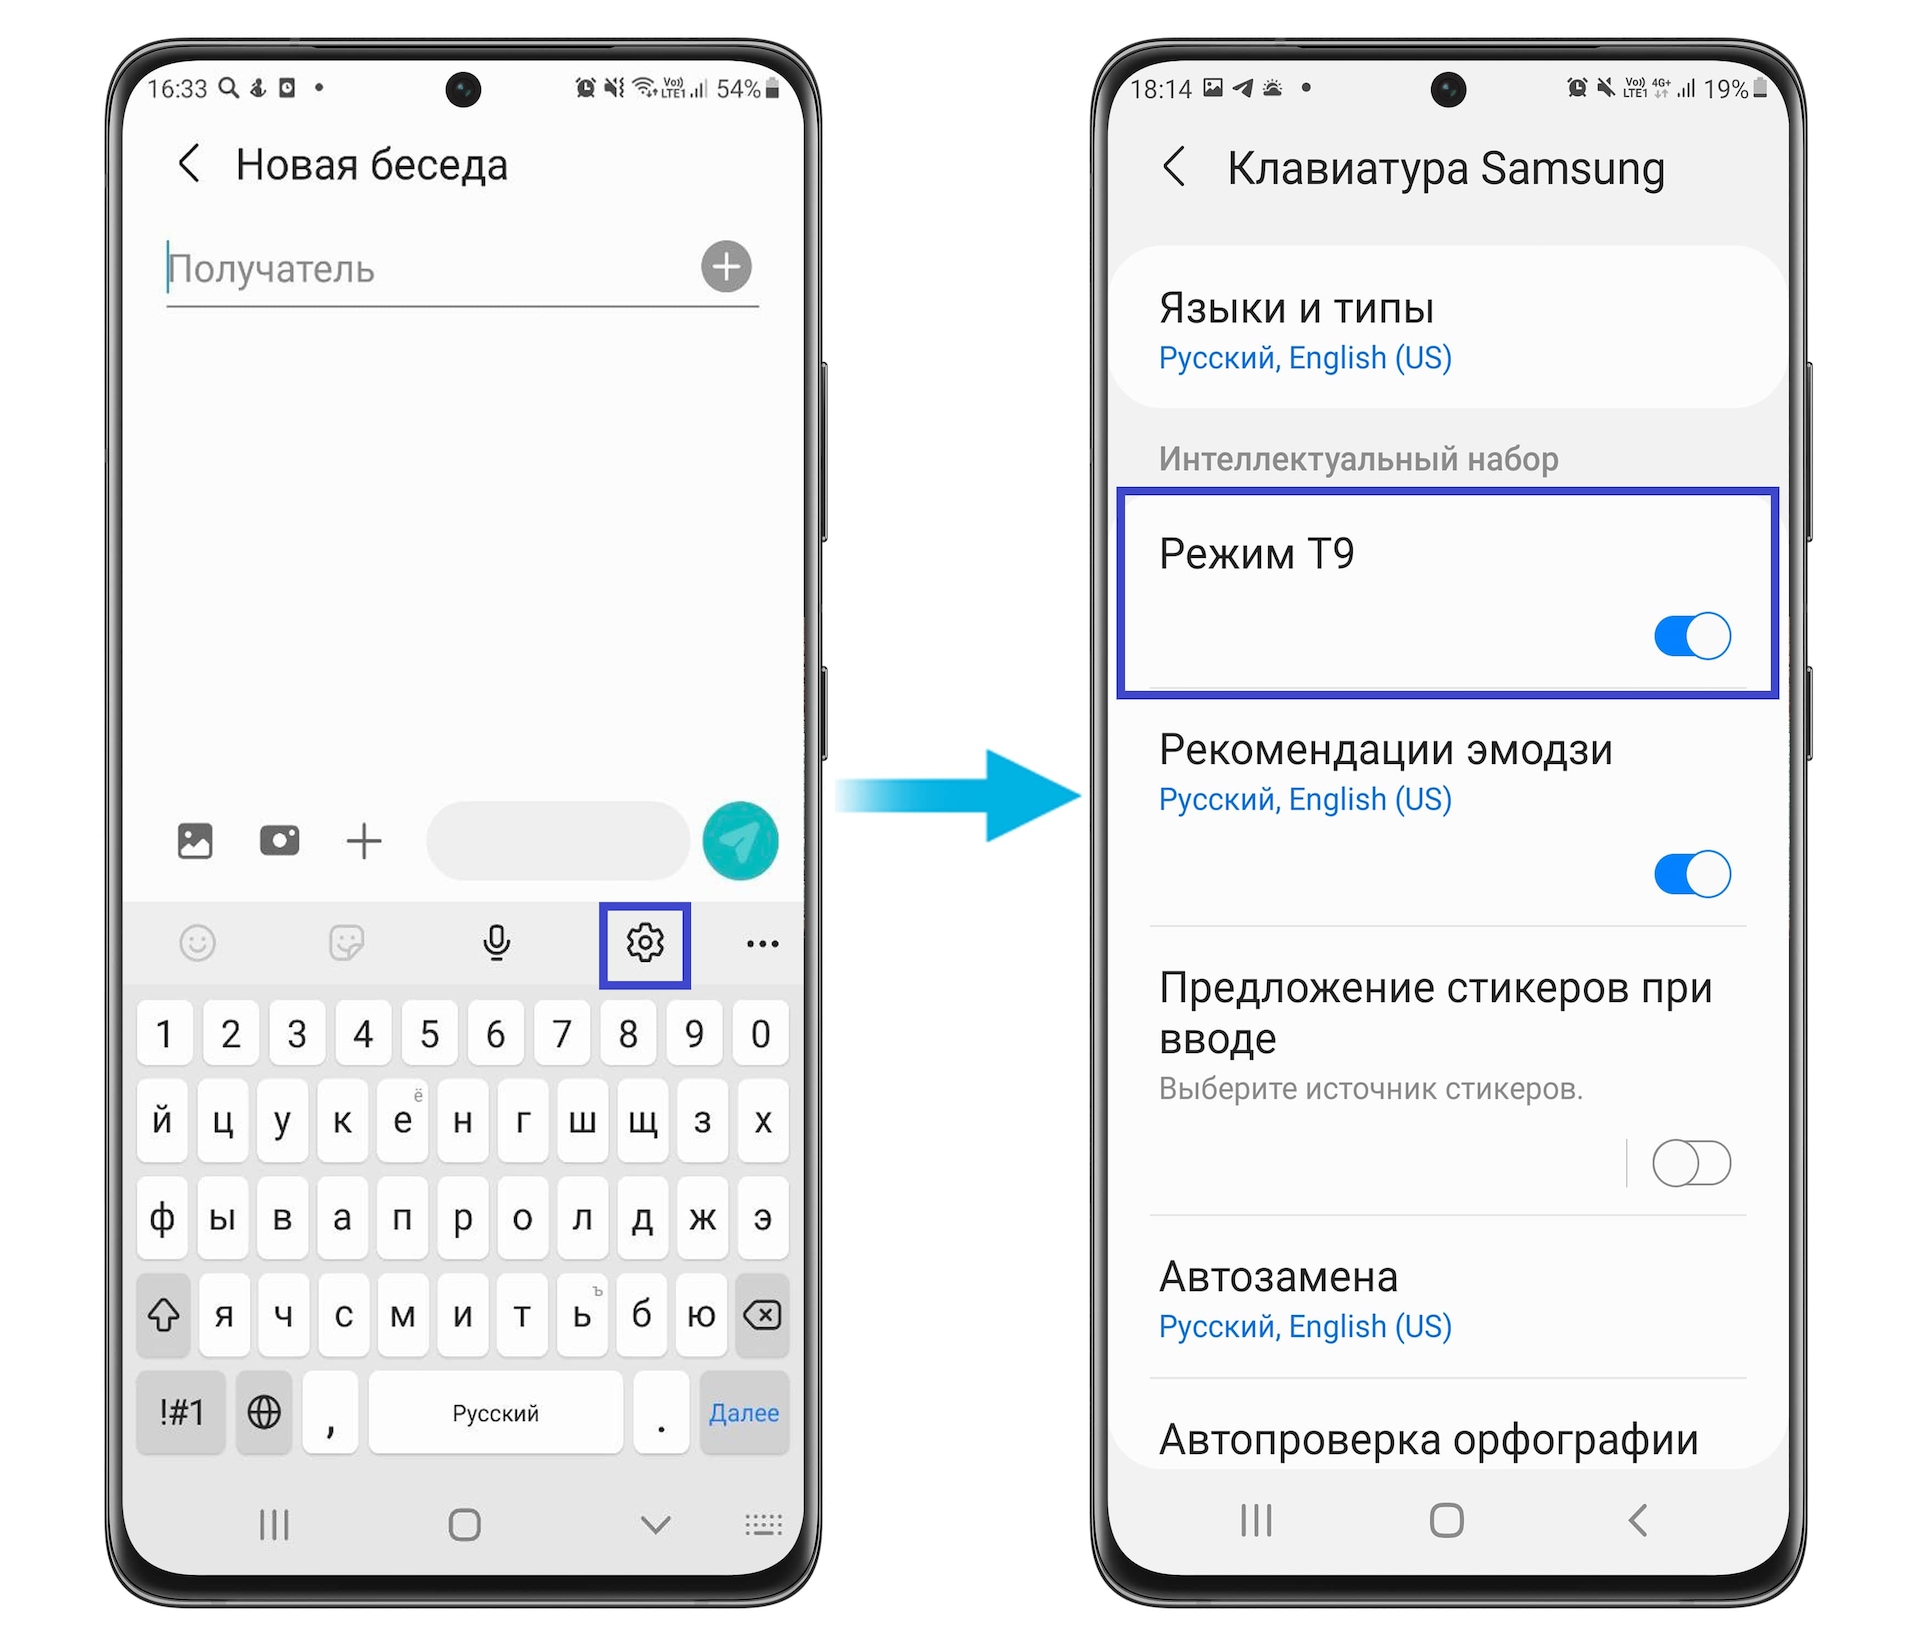 Телеграмм как перевести на русский на андроиде телефоне самсунг фото 82